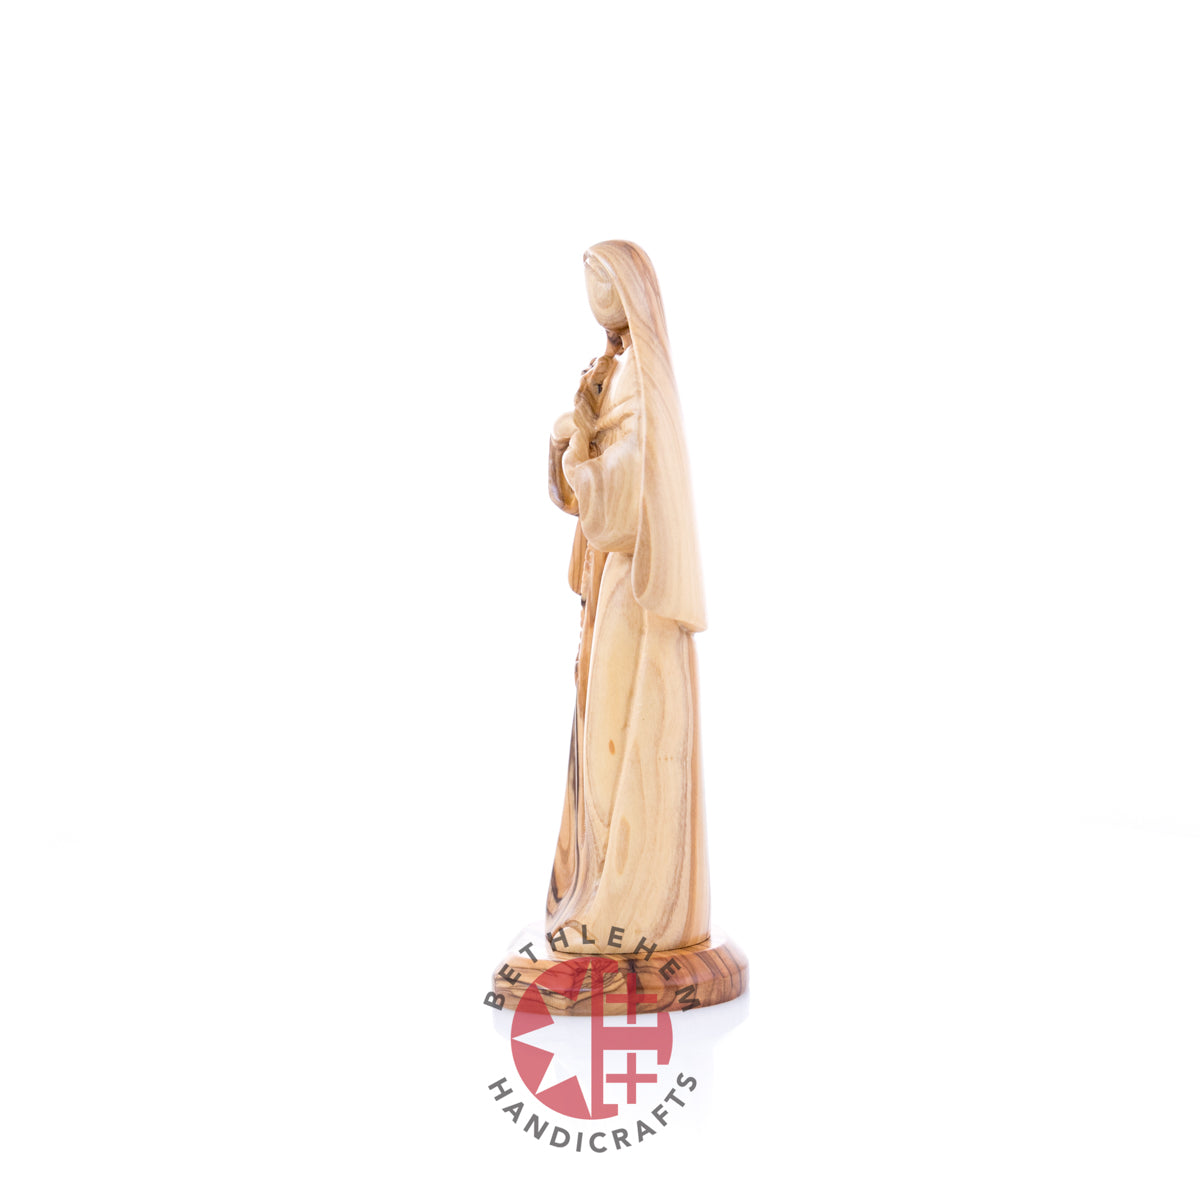 St. Thérèse of Lisieux "The Little Flower of Jesus", 8.7"